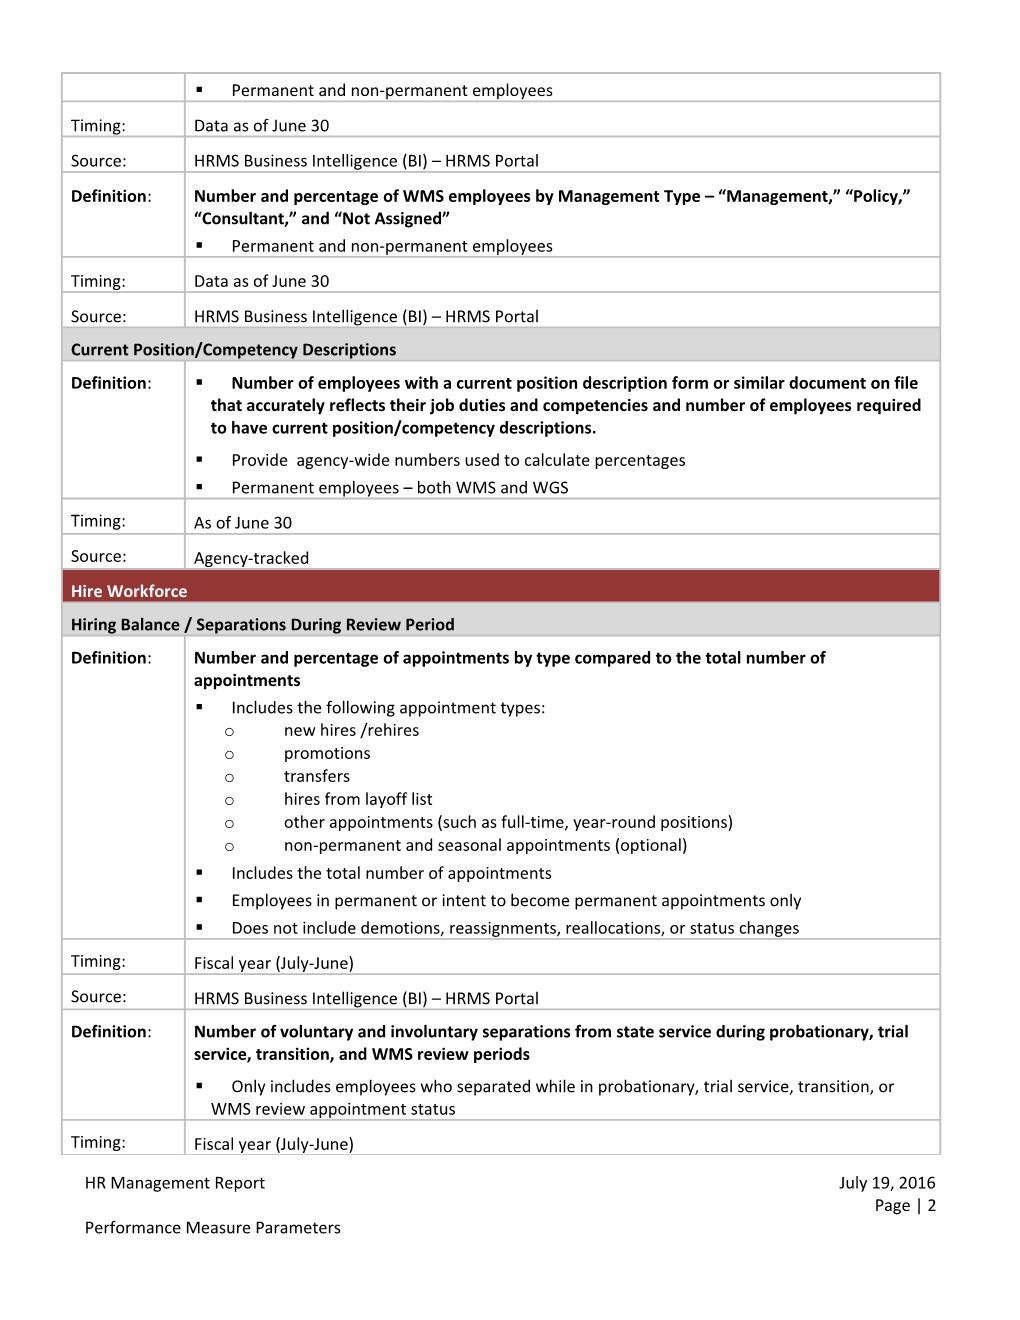 HR Management Report